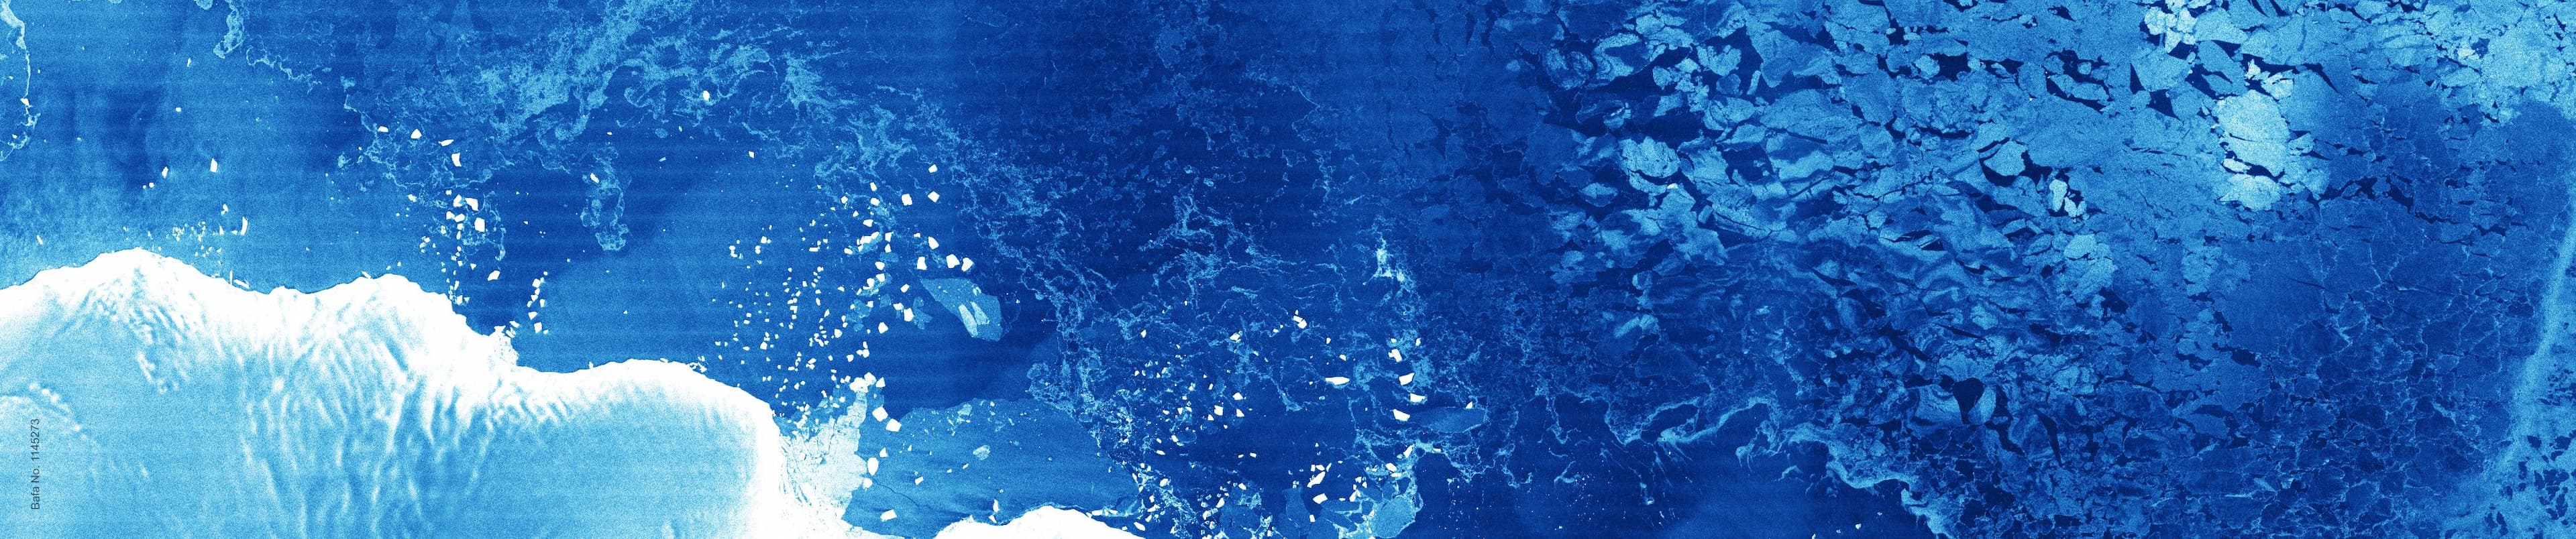 Radar Constellation Satellite Image Antarctica banner image